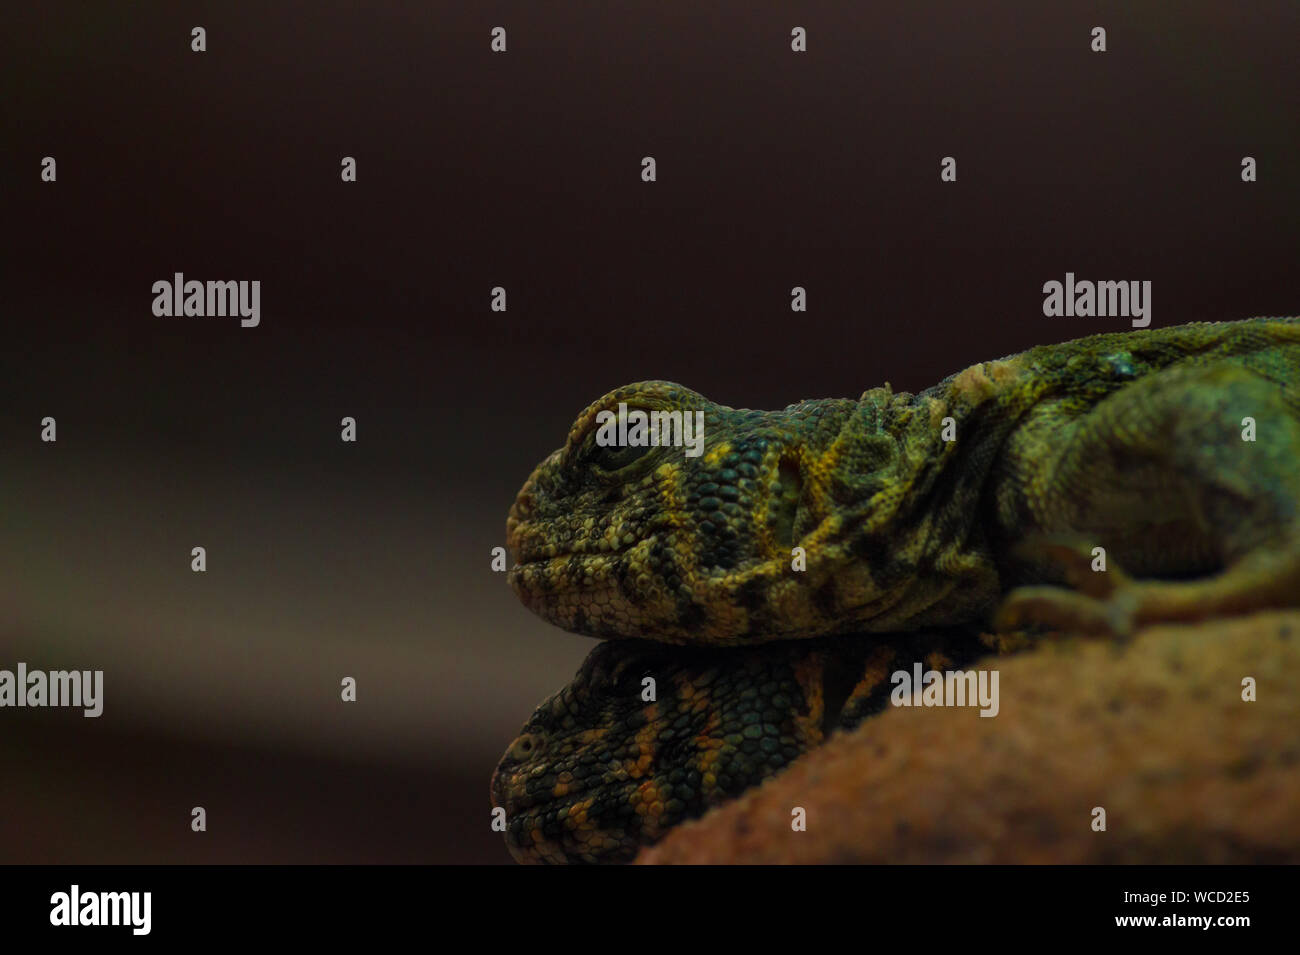 Close-up Of Chameleons On Rock Stock Photo